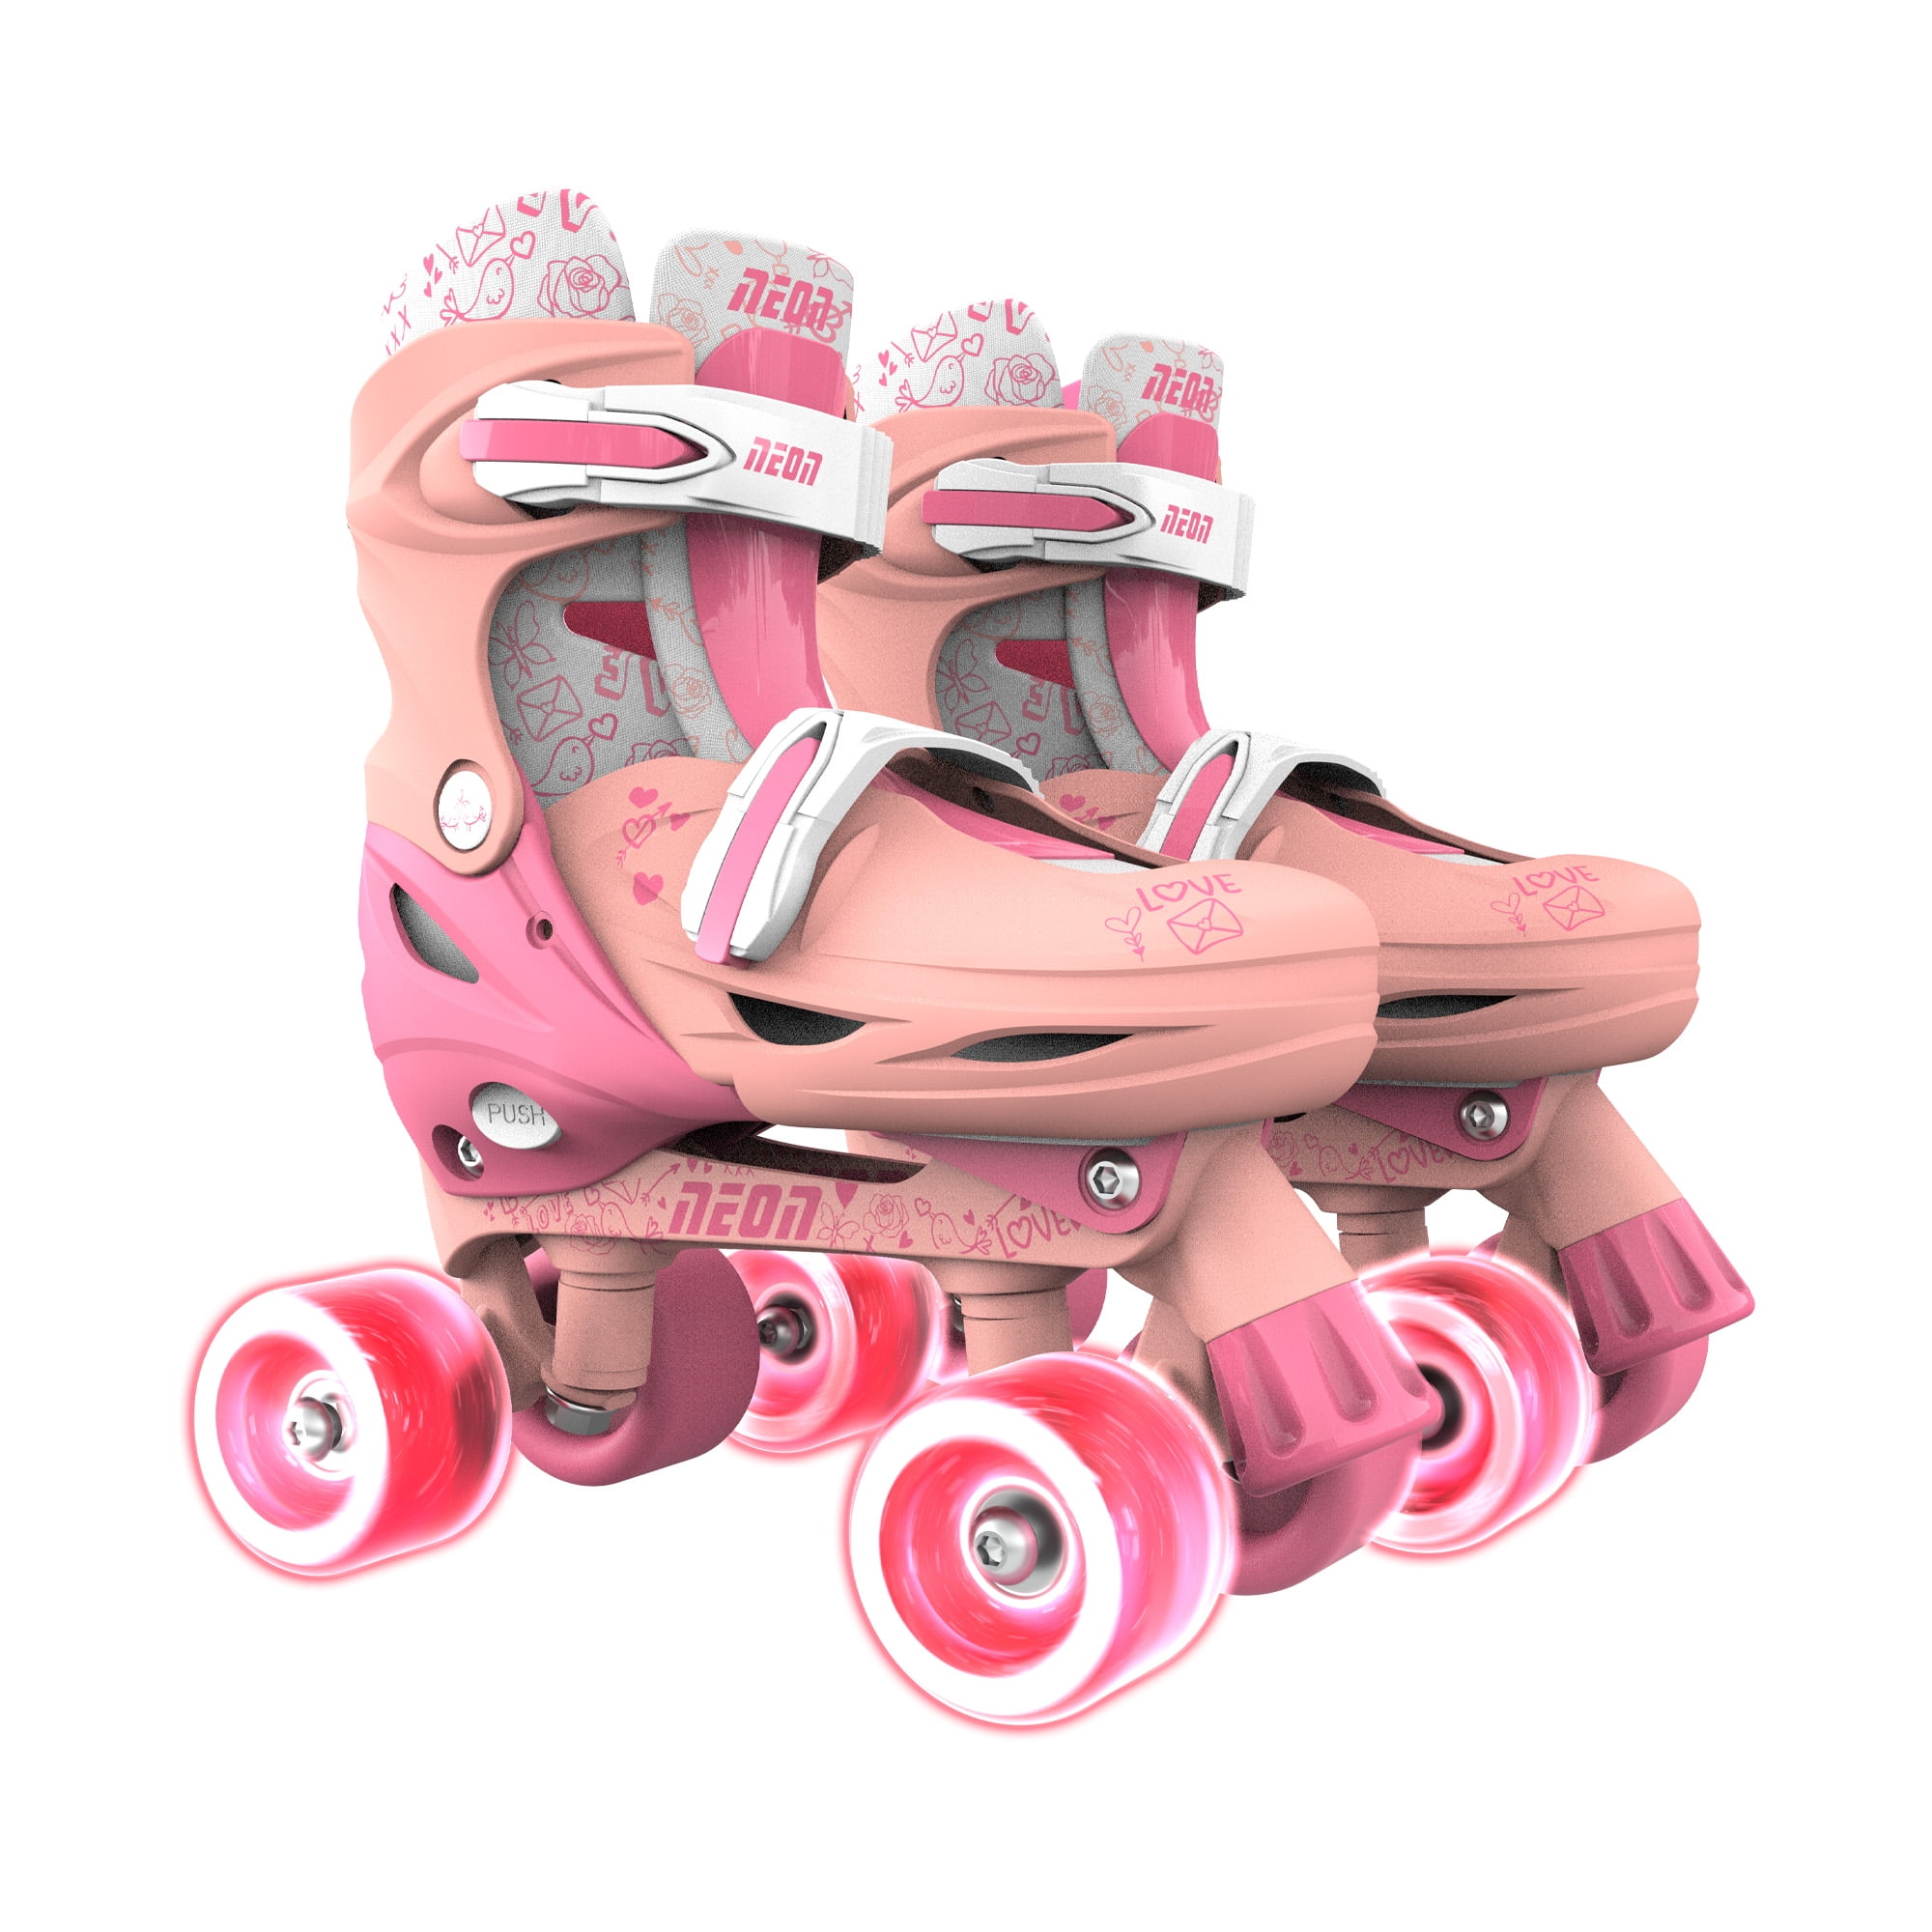 Neon Quad Kids Skates, Adjustable Size 3-6 US, One-Pair, Unisex, Pink Peach